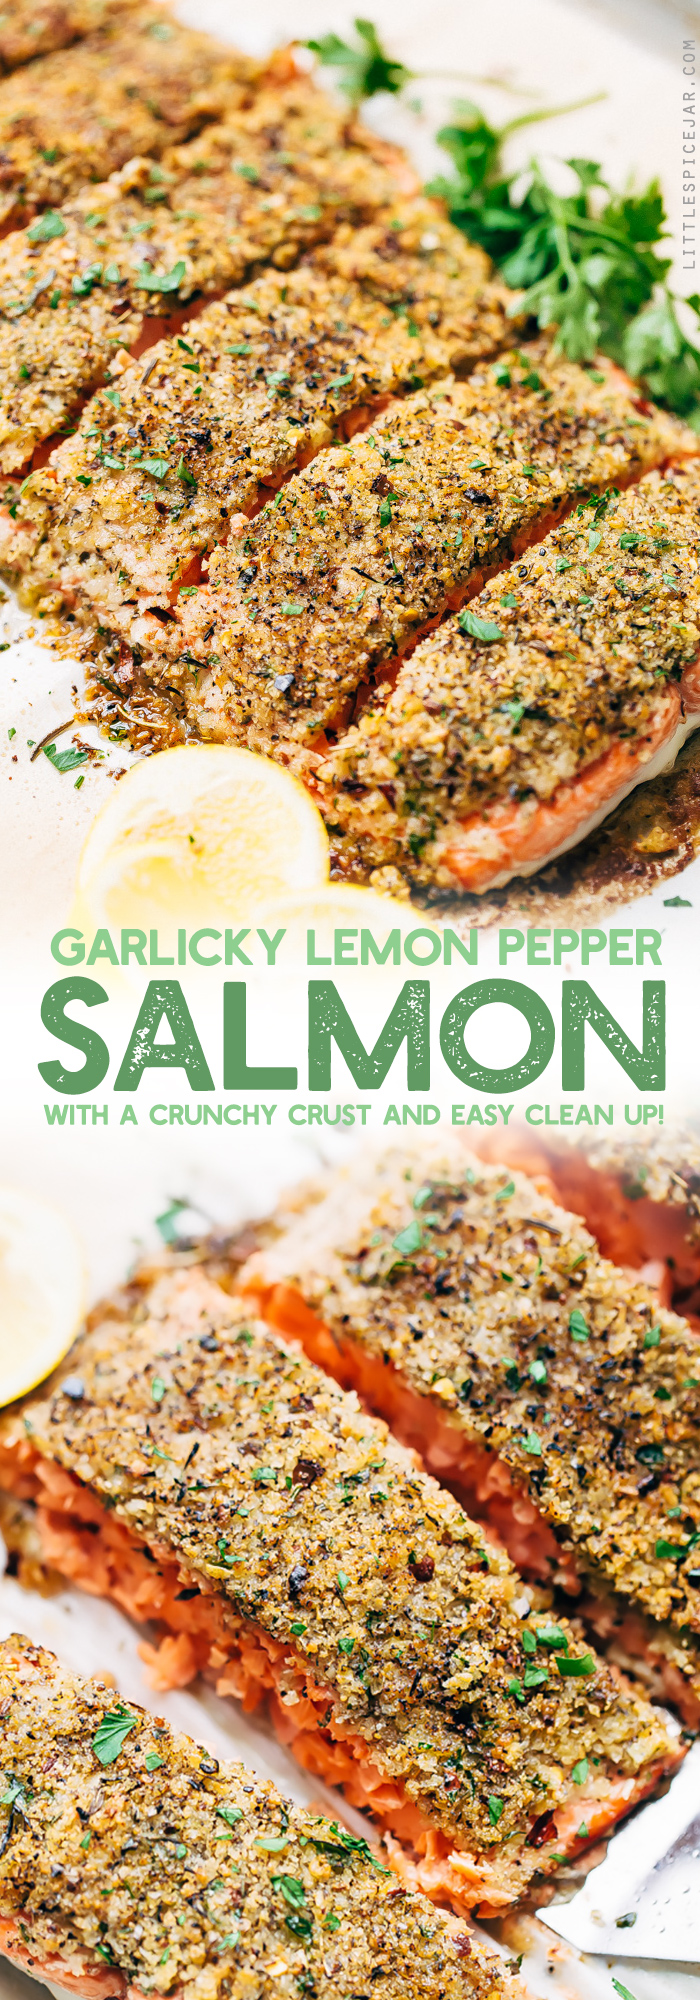 Crunchy Garlic Lemon Pepper Salmon Recipe - an easy weeknight friendly salmon recipe that has a crunchy panko crust on top! Healthy and delicious! #bakedsalmon #lemonpeppersalmon #roastedsalmon #breadedfish | Littlespicejar.com